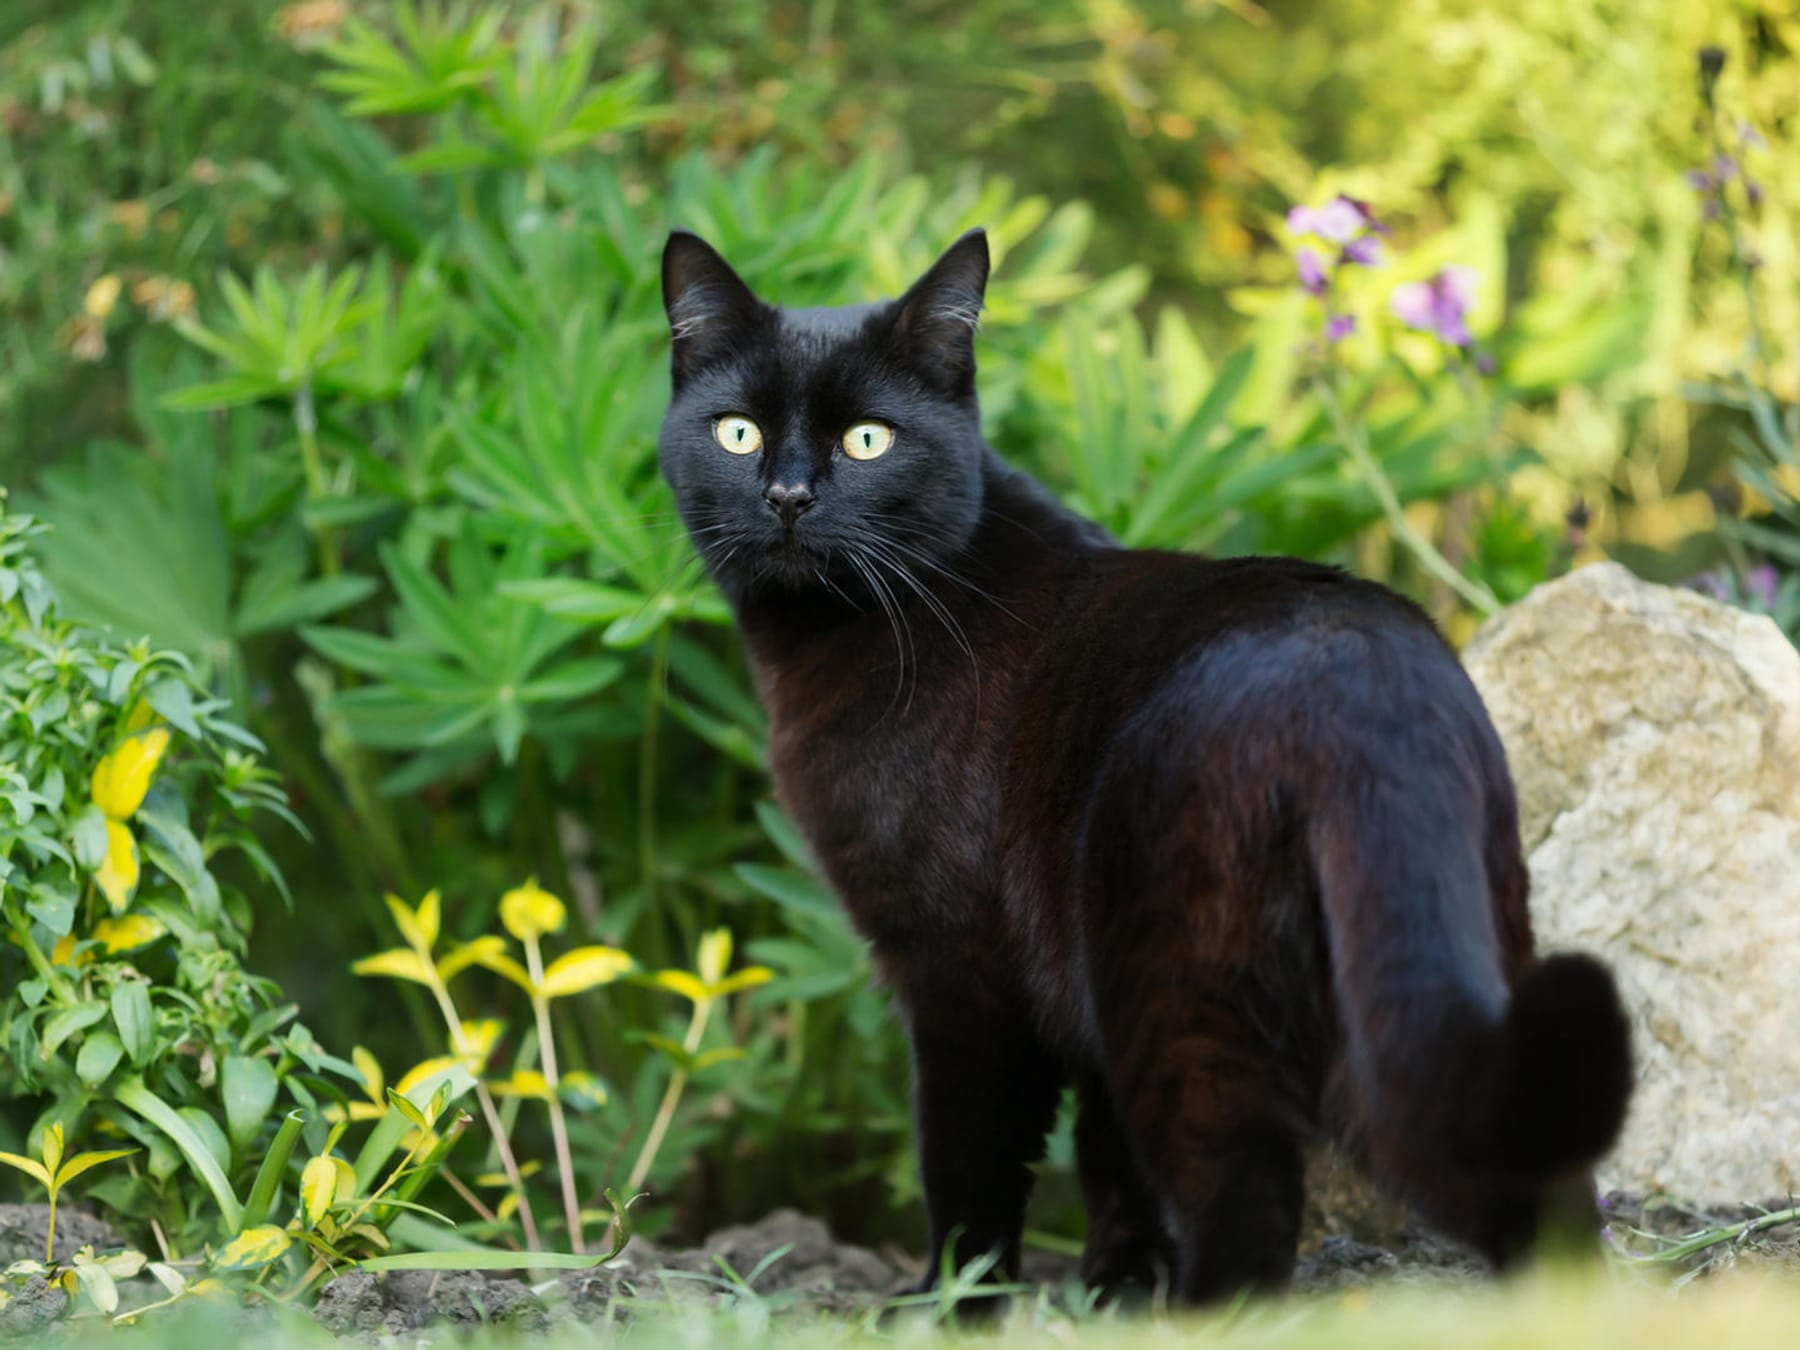 Katzen effektiv vertreiben: Das hilft gegen fremde Katzen im Garten